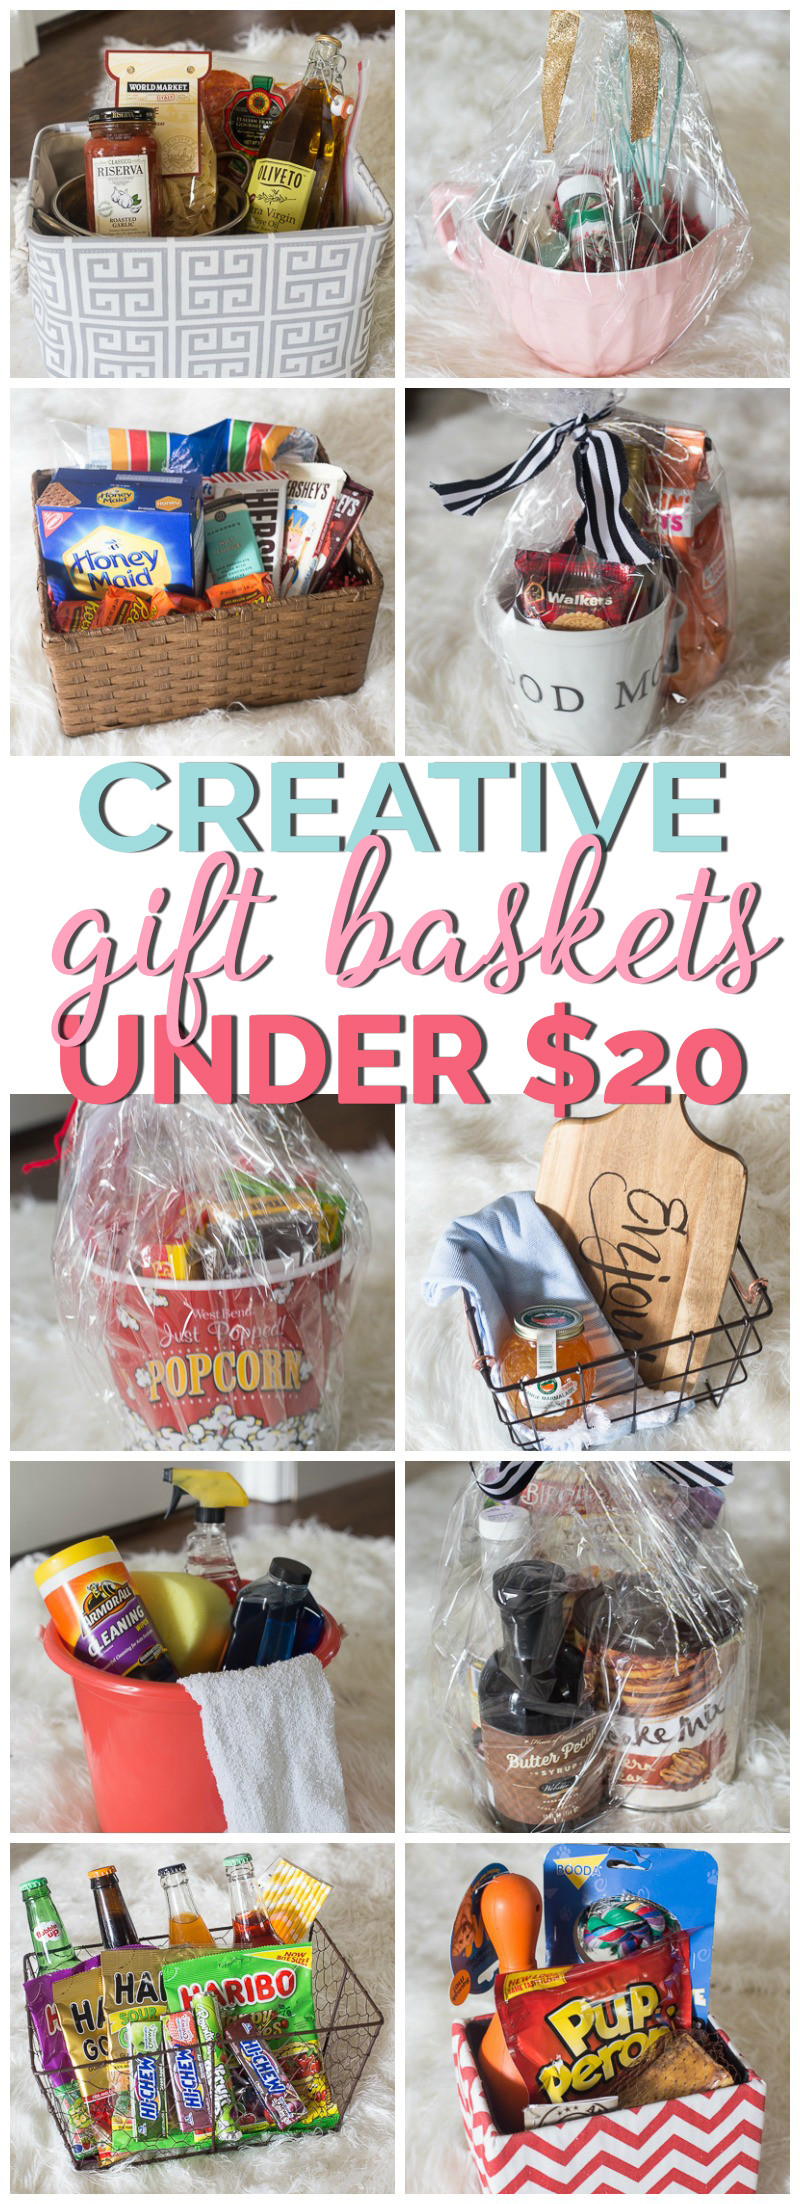 Personalized Gift Basket Ideas
 Creative Gift Basket Ideas Under $20